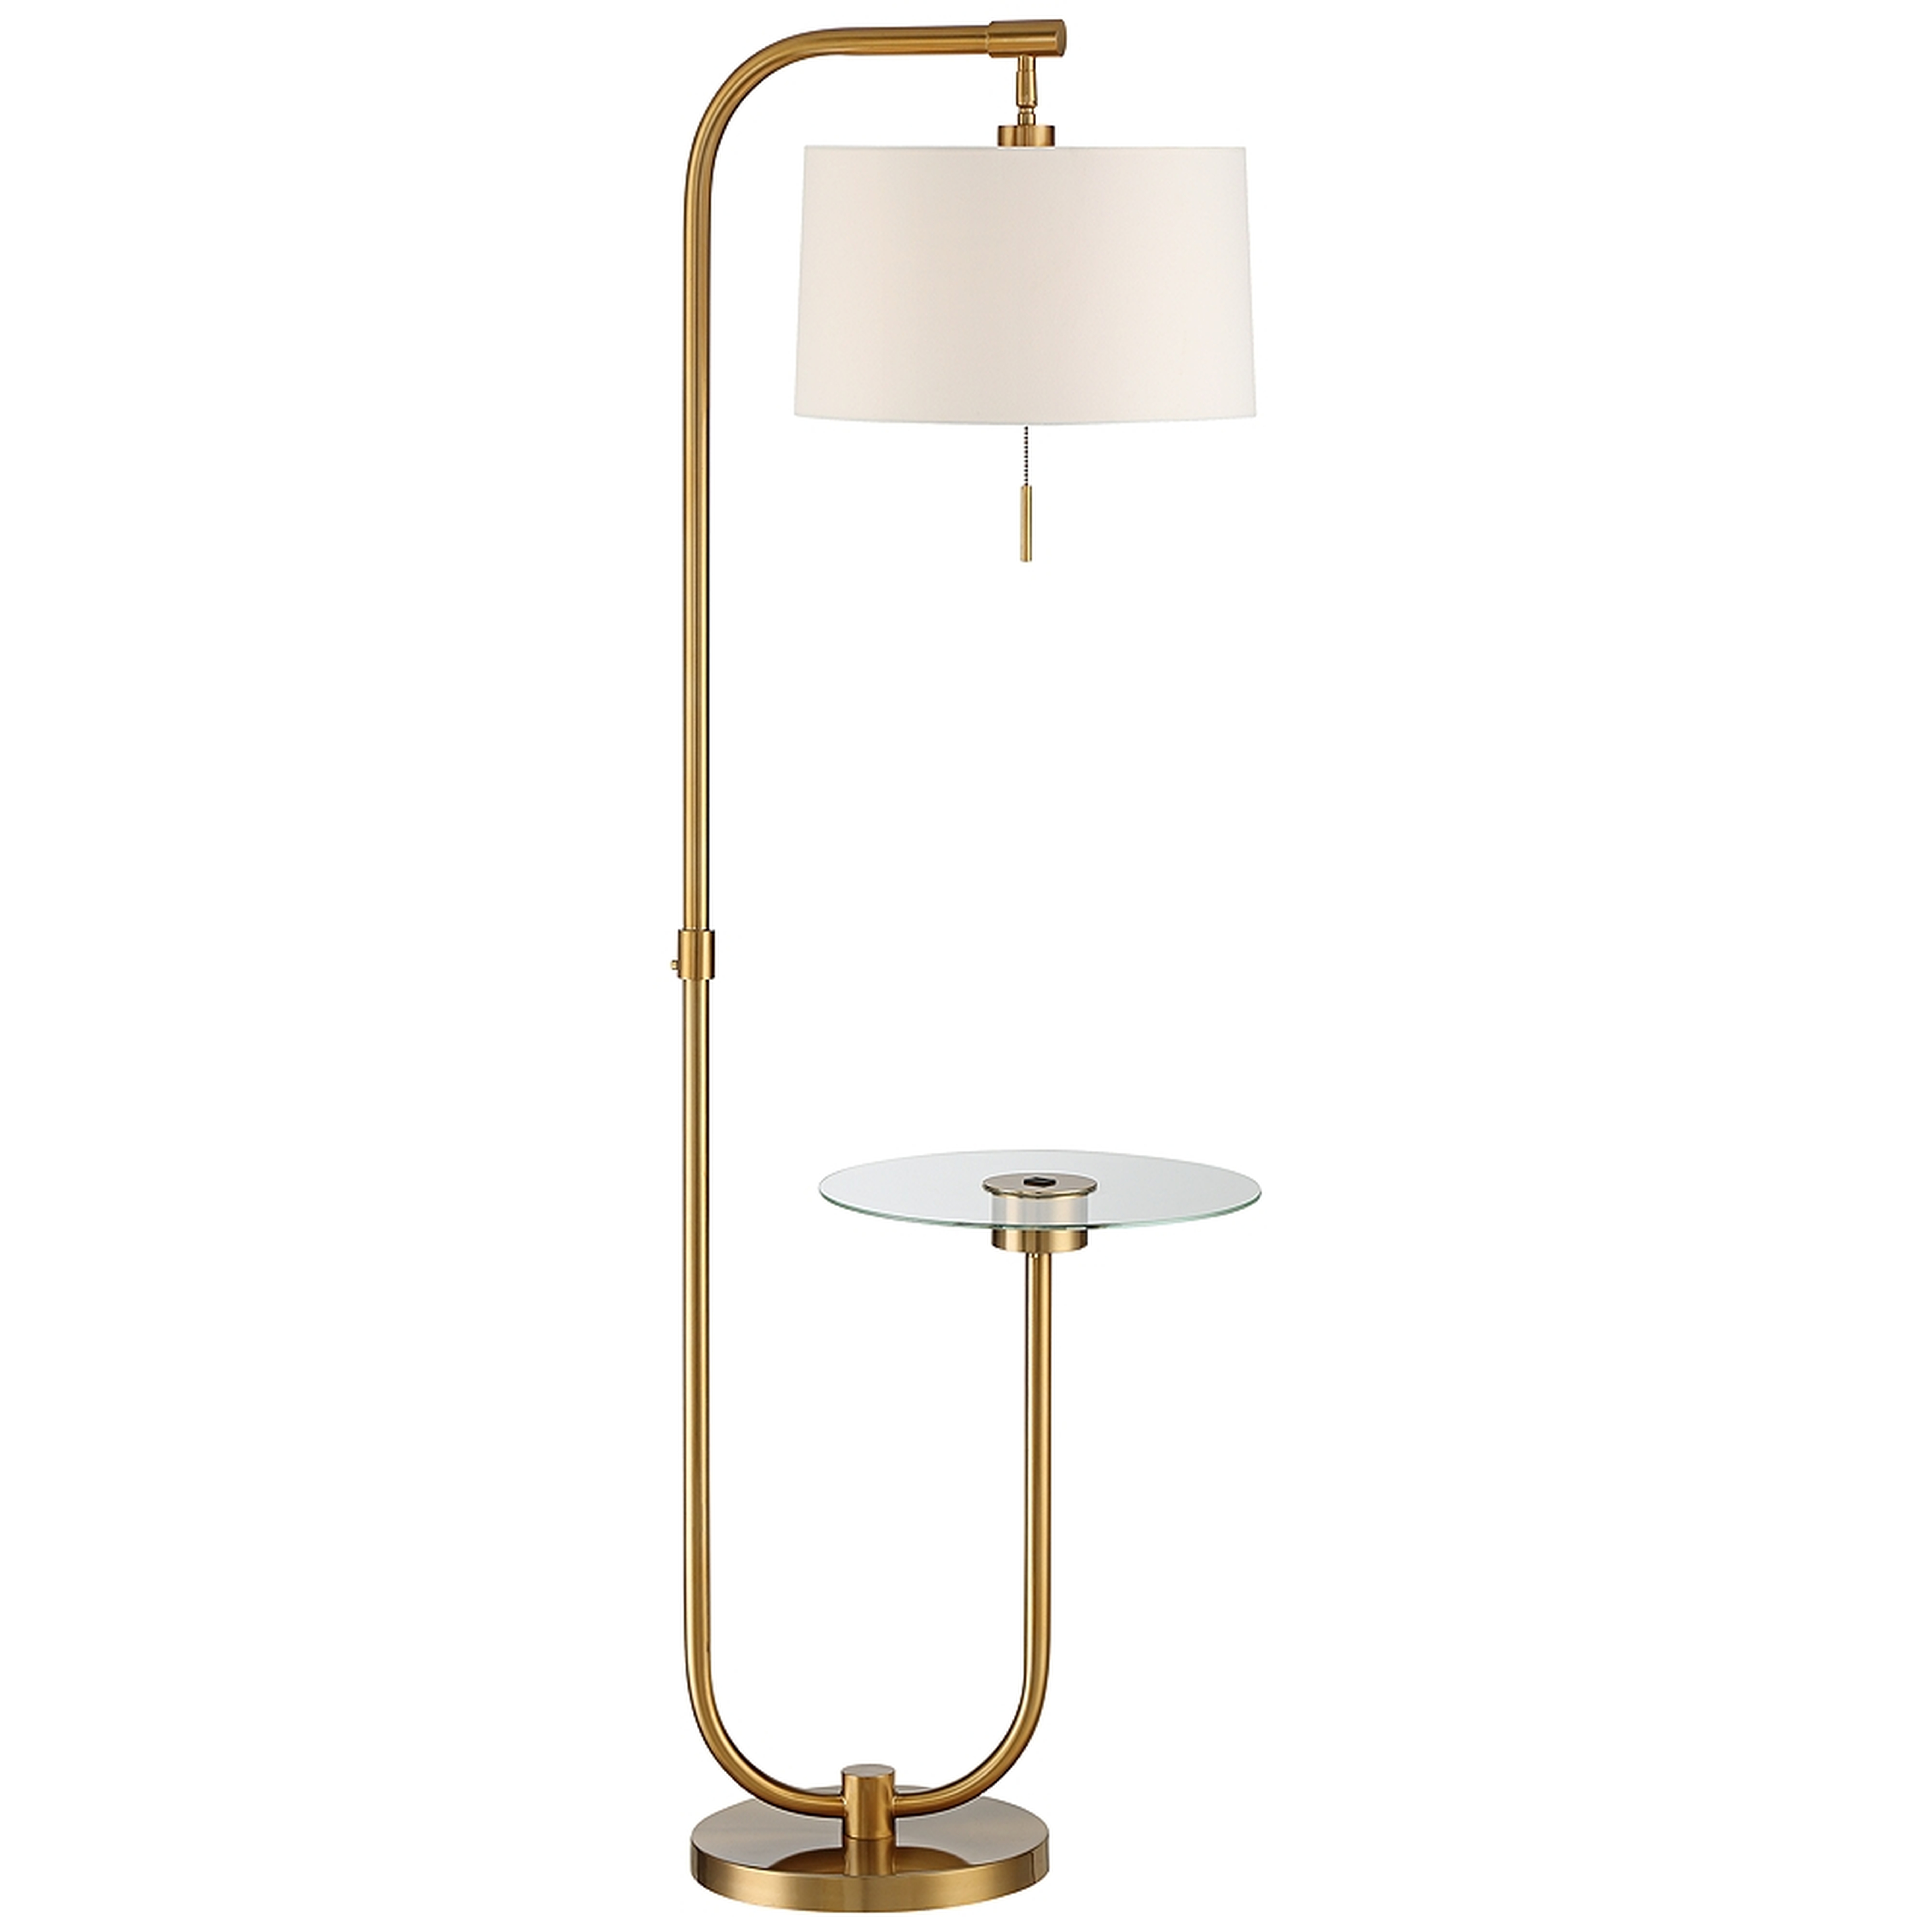 Possini Euro Volta Antique Brass USB Tray Table Floor Lamp - Style # 79X90 - Lamps Plus